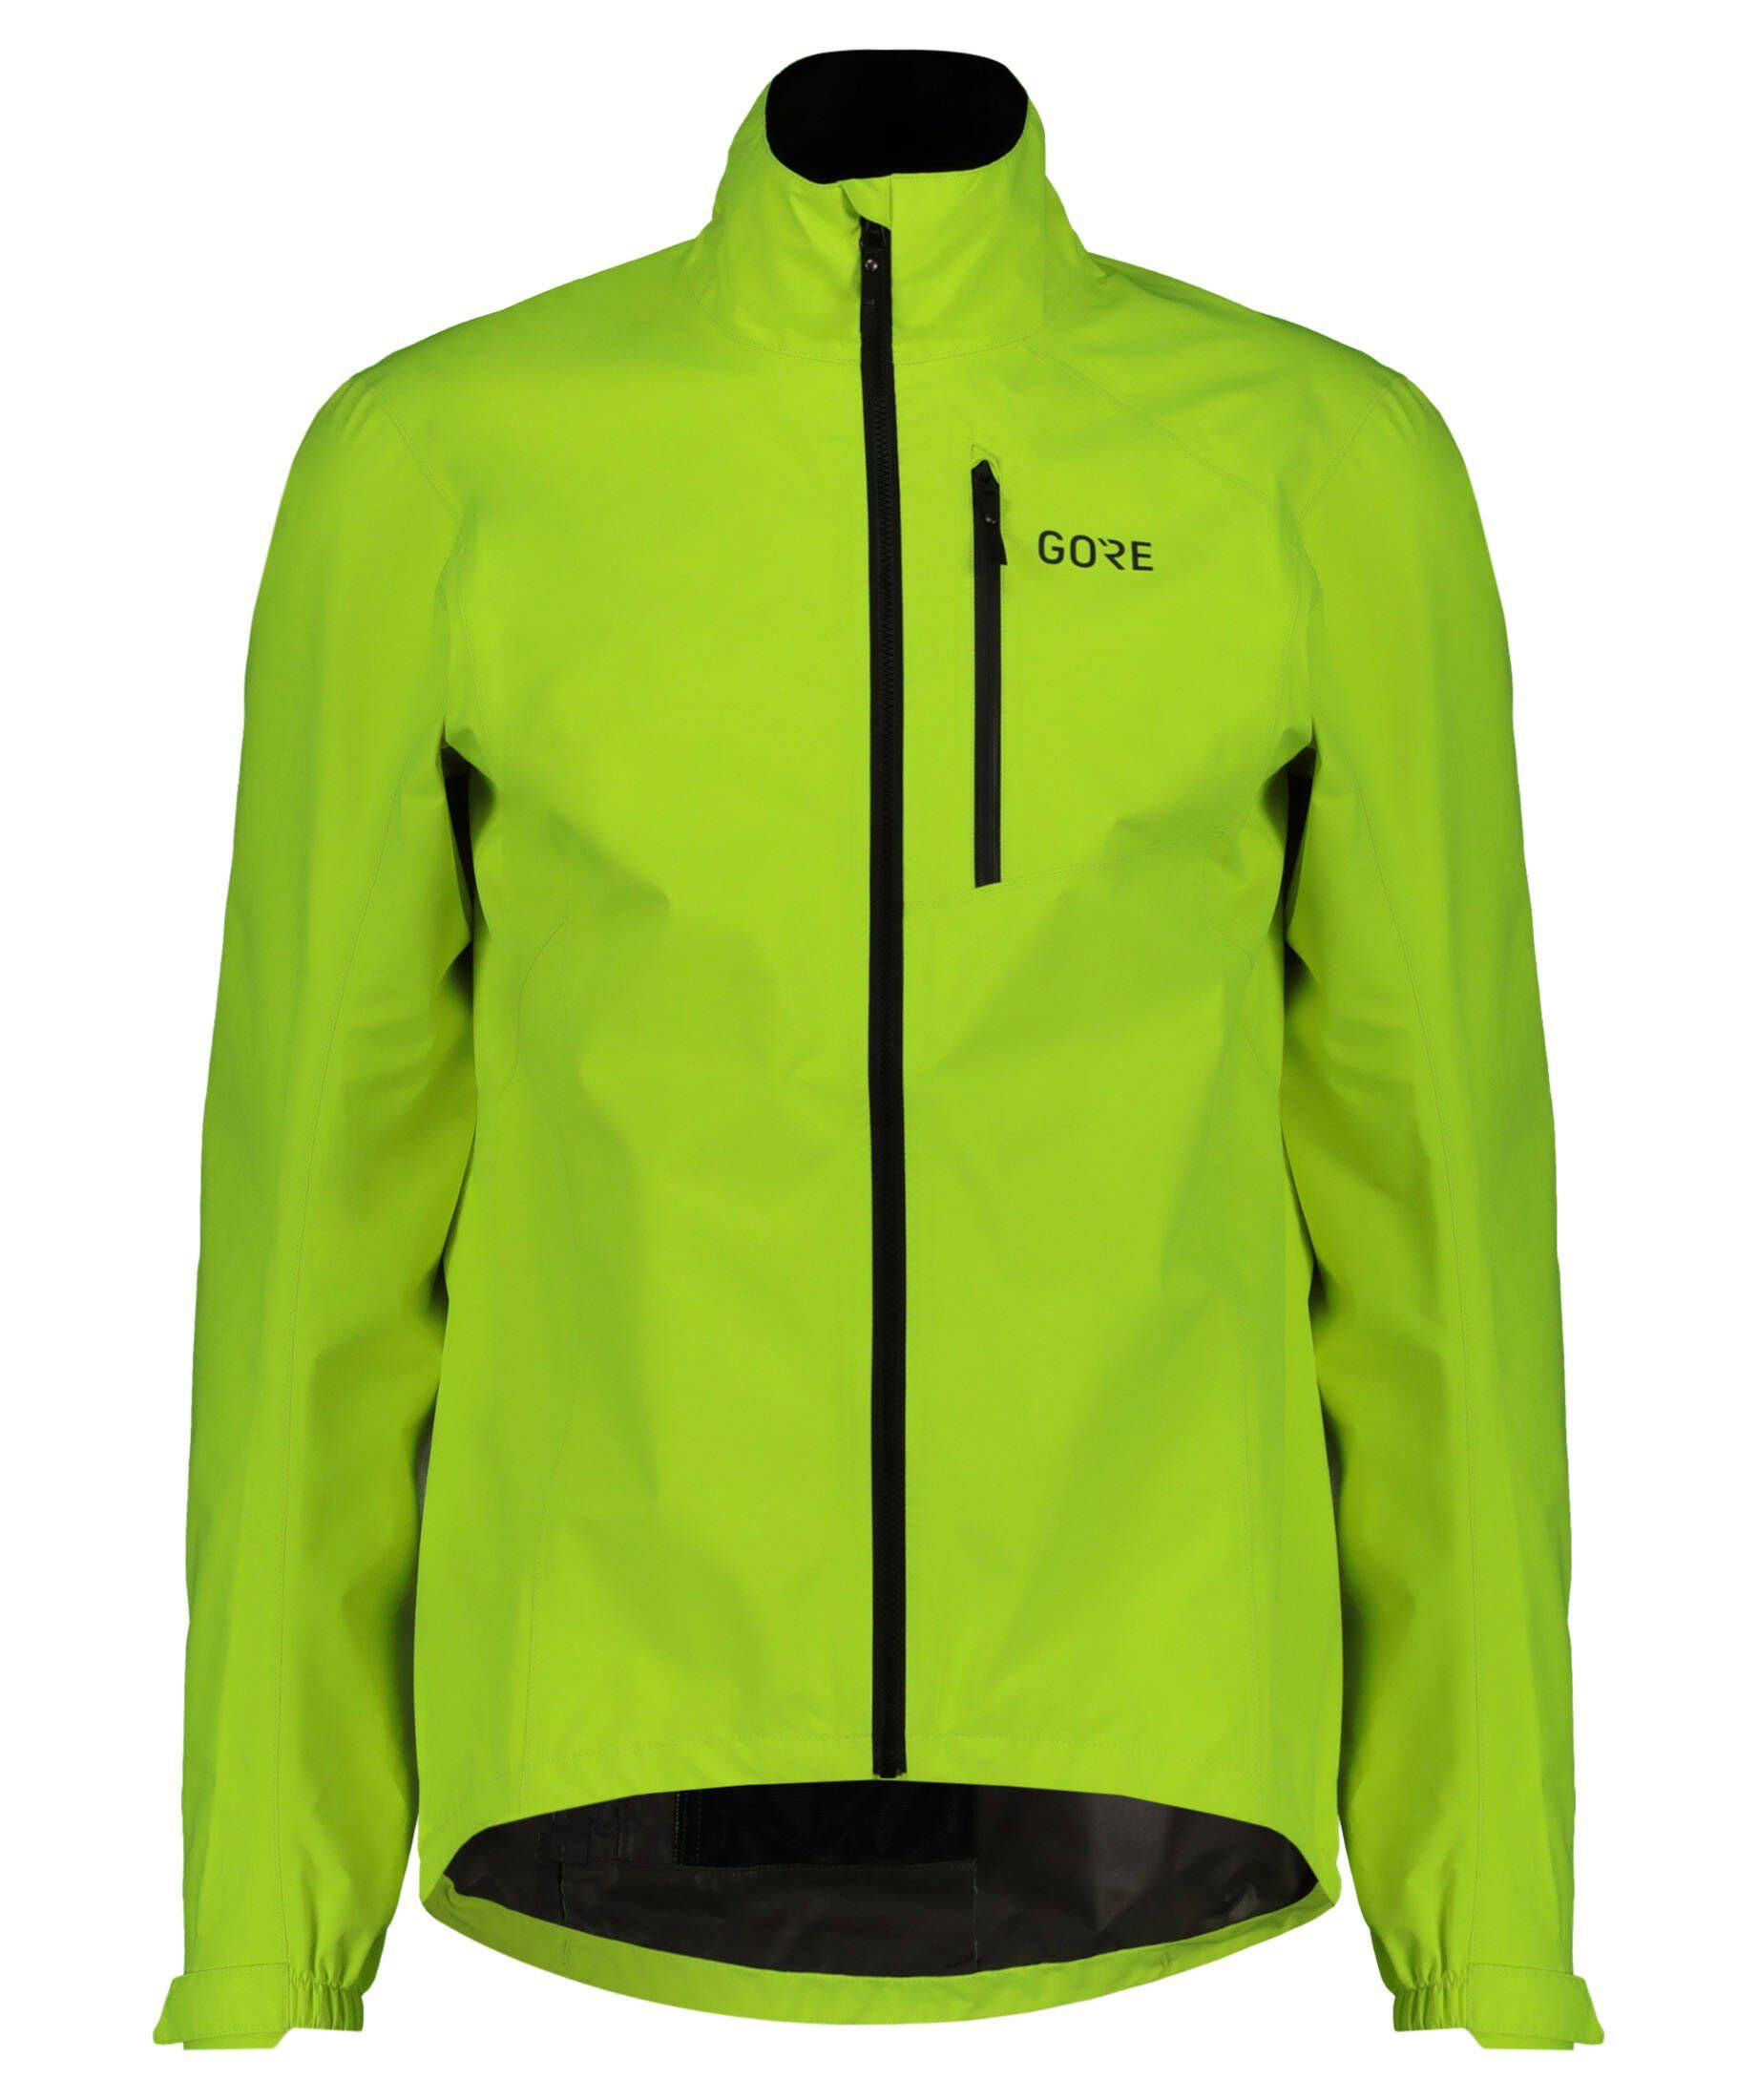 GORE® Wear Fahrradjacke (510) Herren gelb "GTX Jacket" Radjacke Paclite